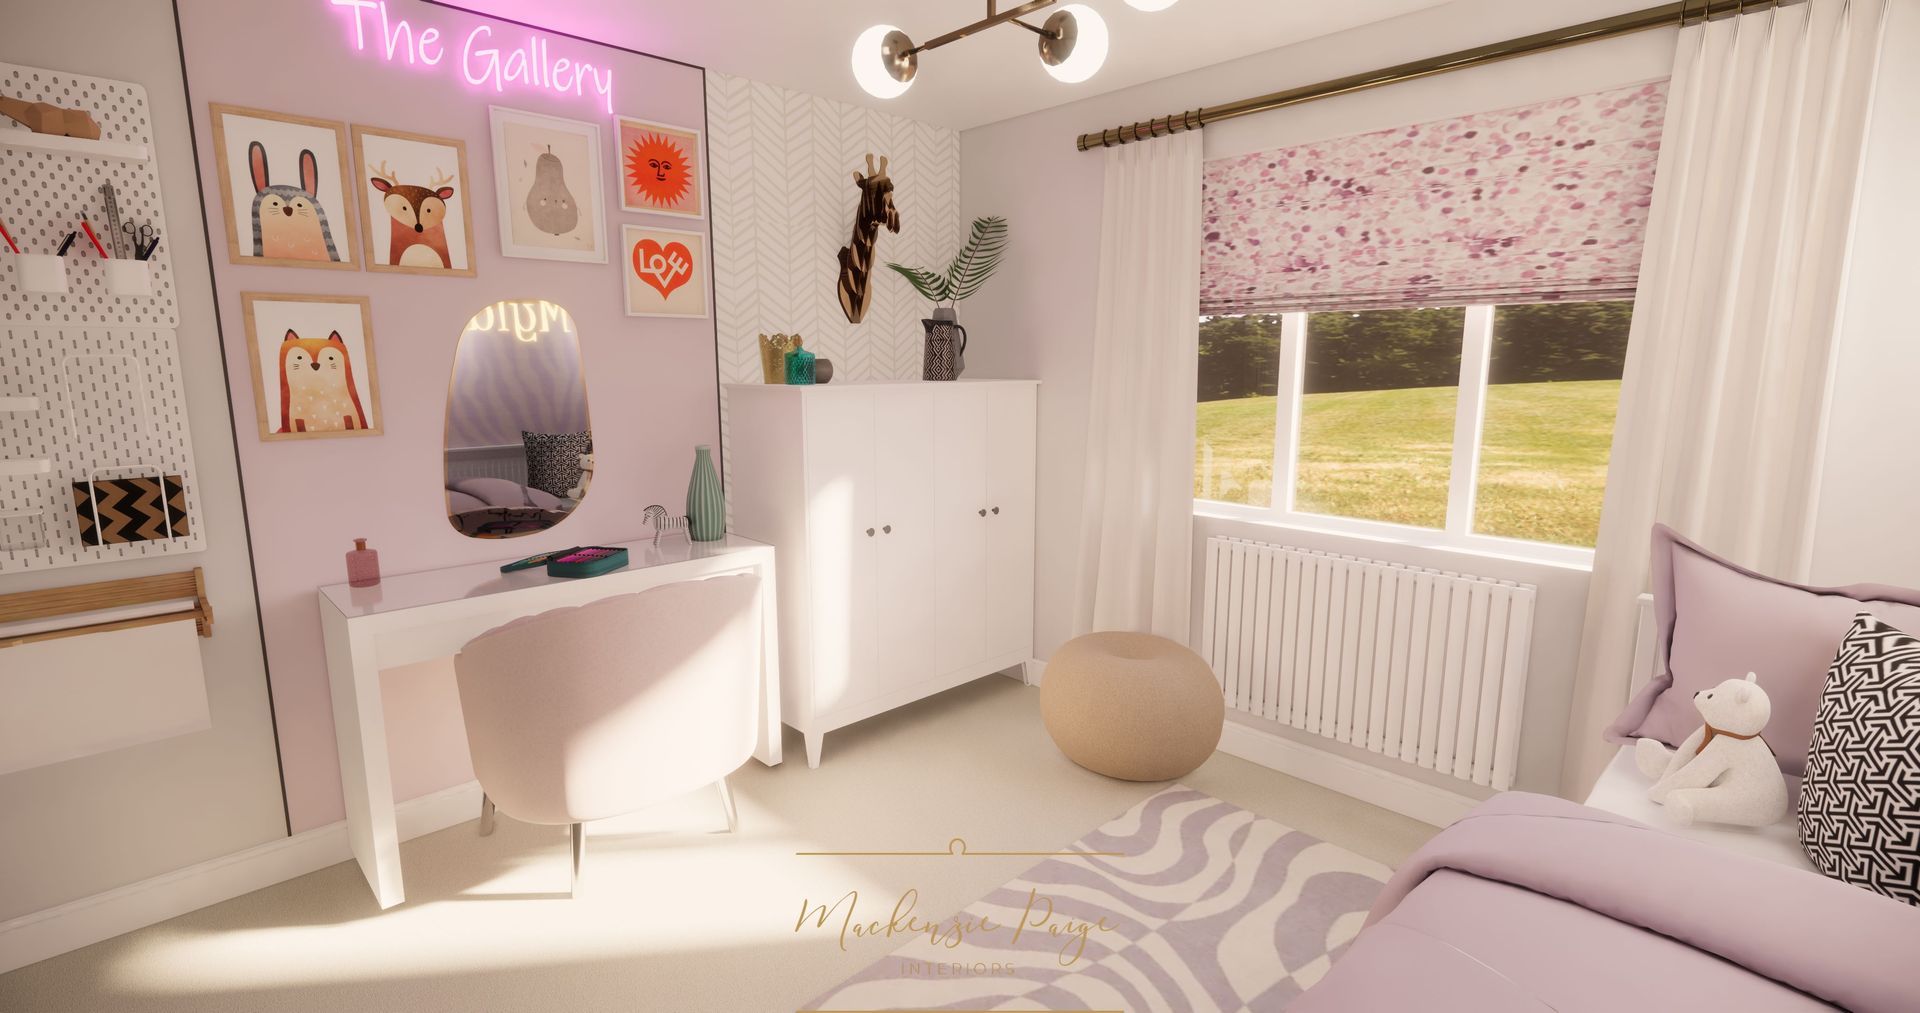 interior design for child's bedroom by surrey based interior designer